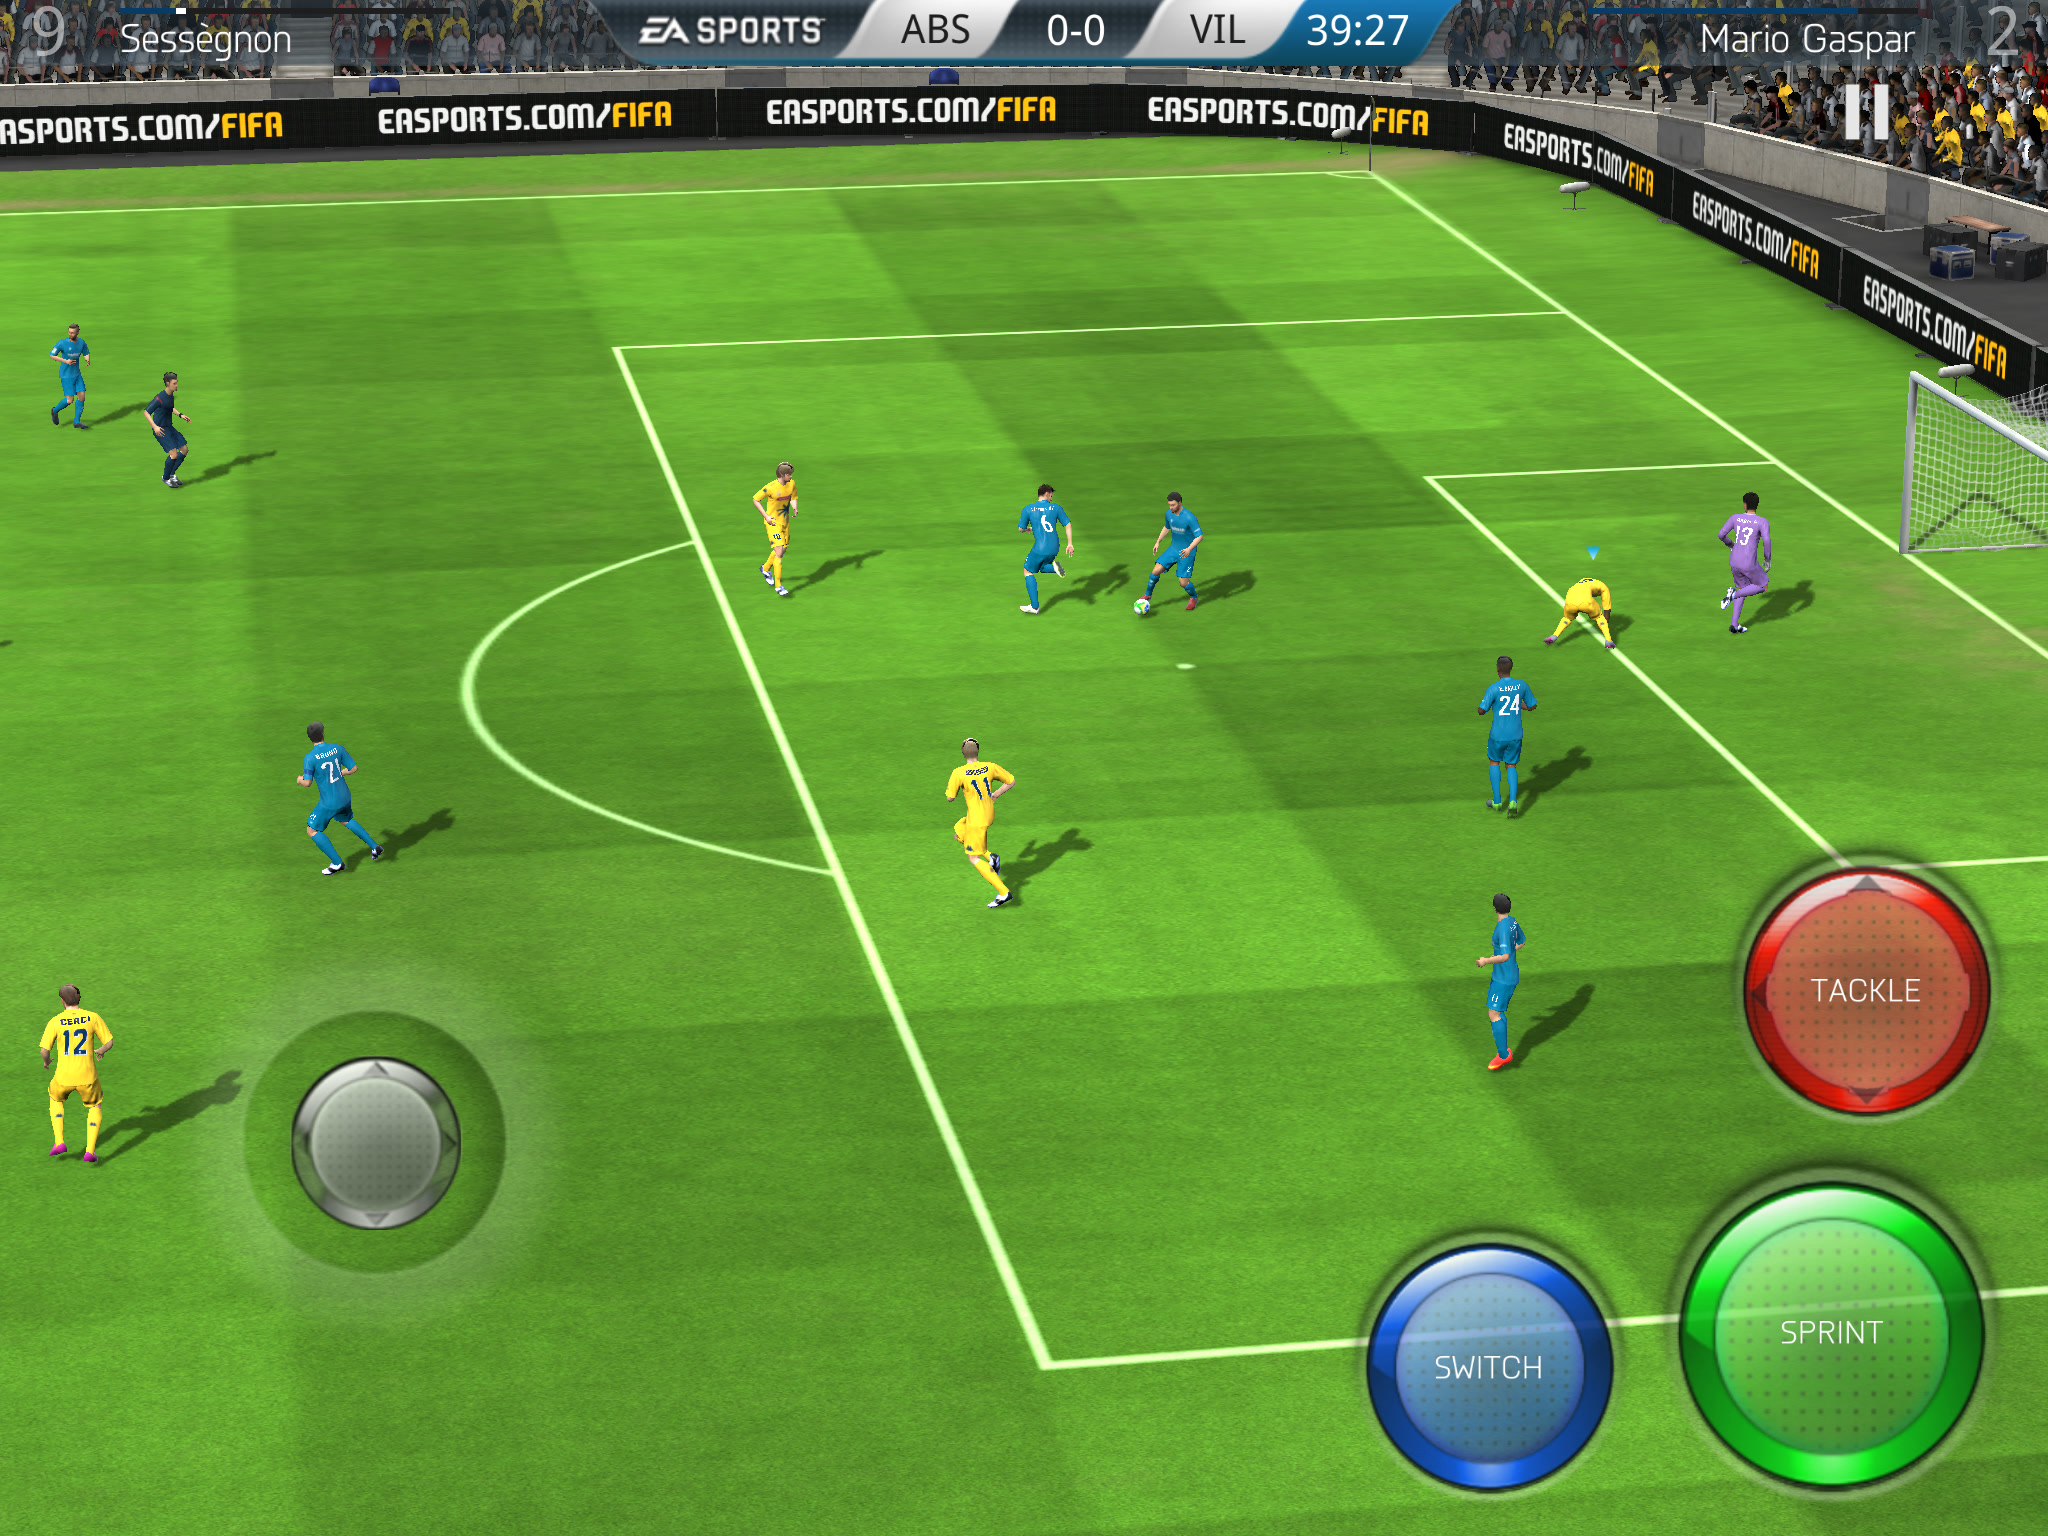 FIFA 16 Ultimate Team (APK) - Review & Download